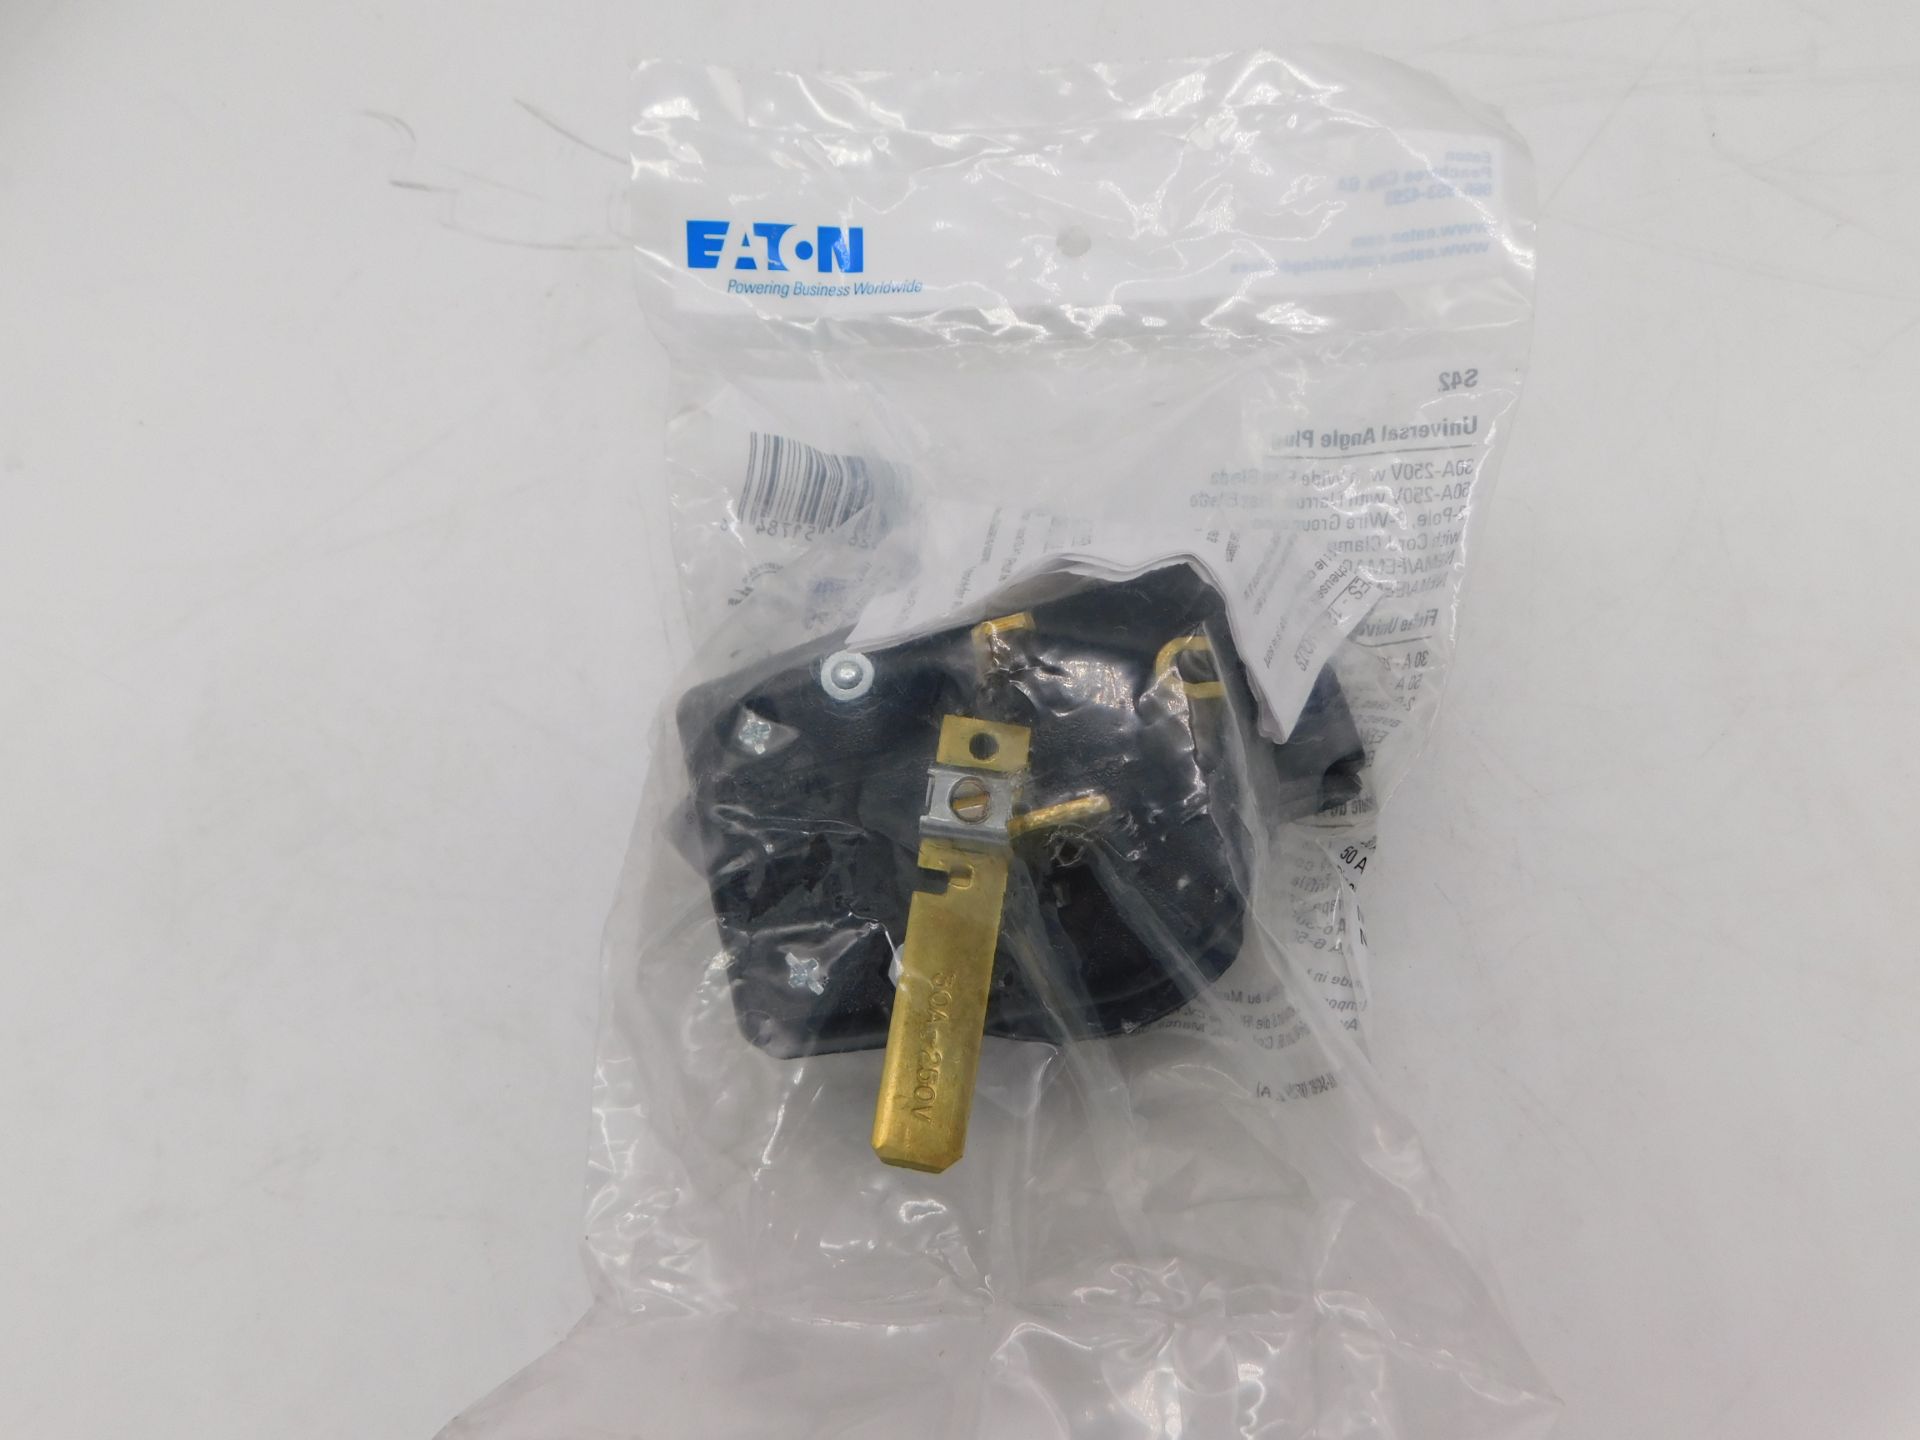 3x Eaton S42 Plugs Universal Angle Plug 2P 50A 250V EA